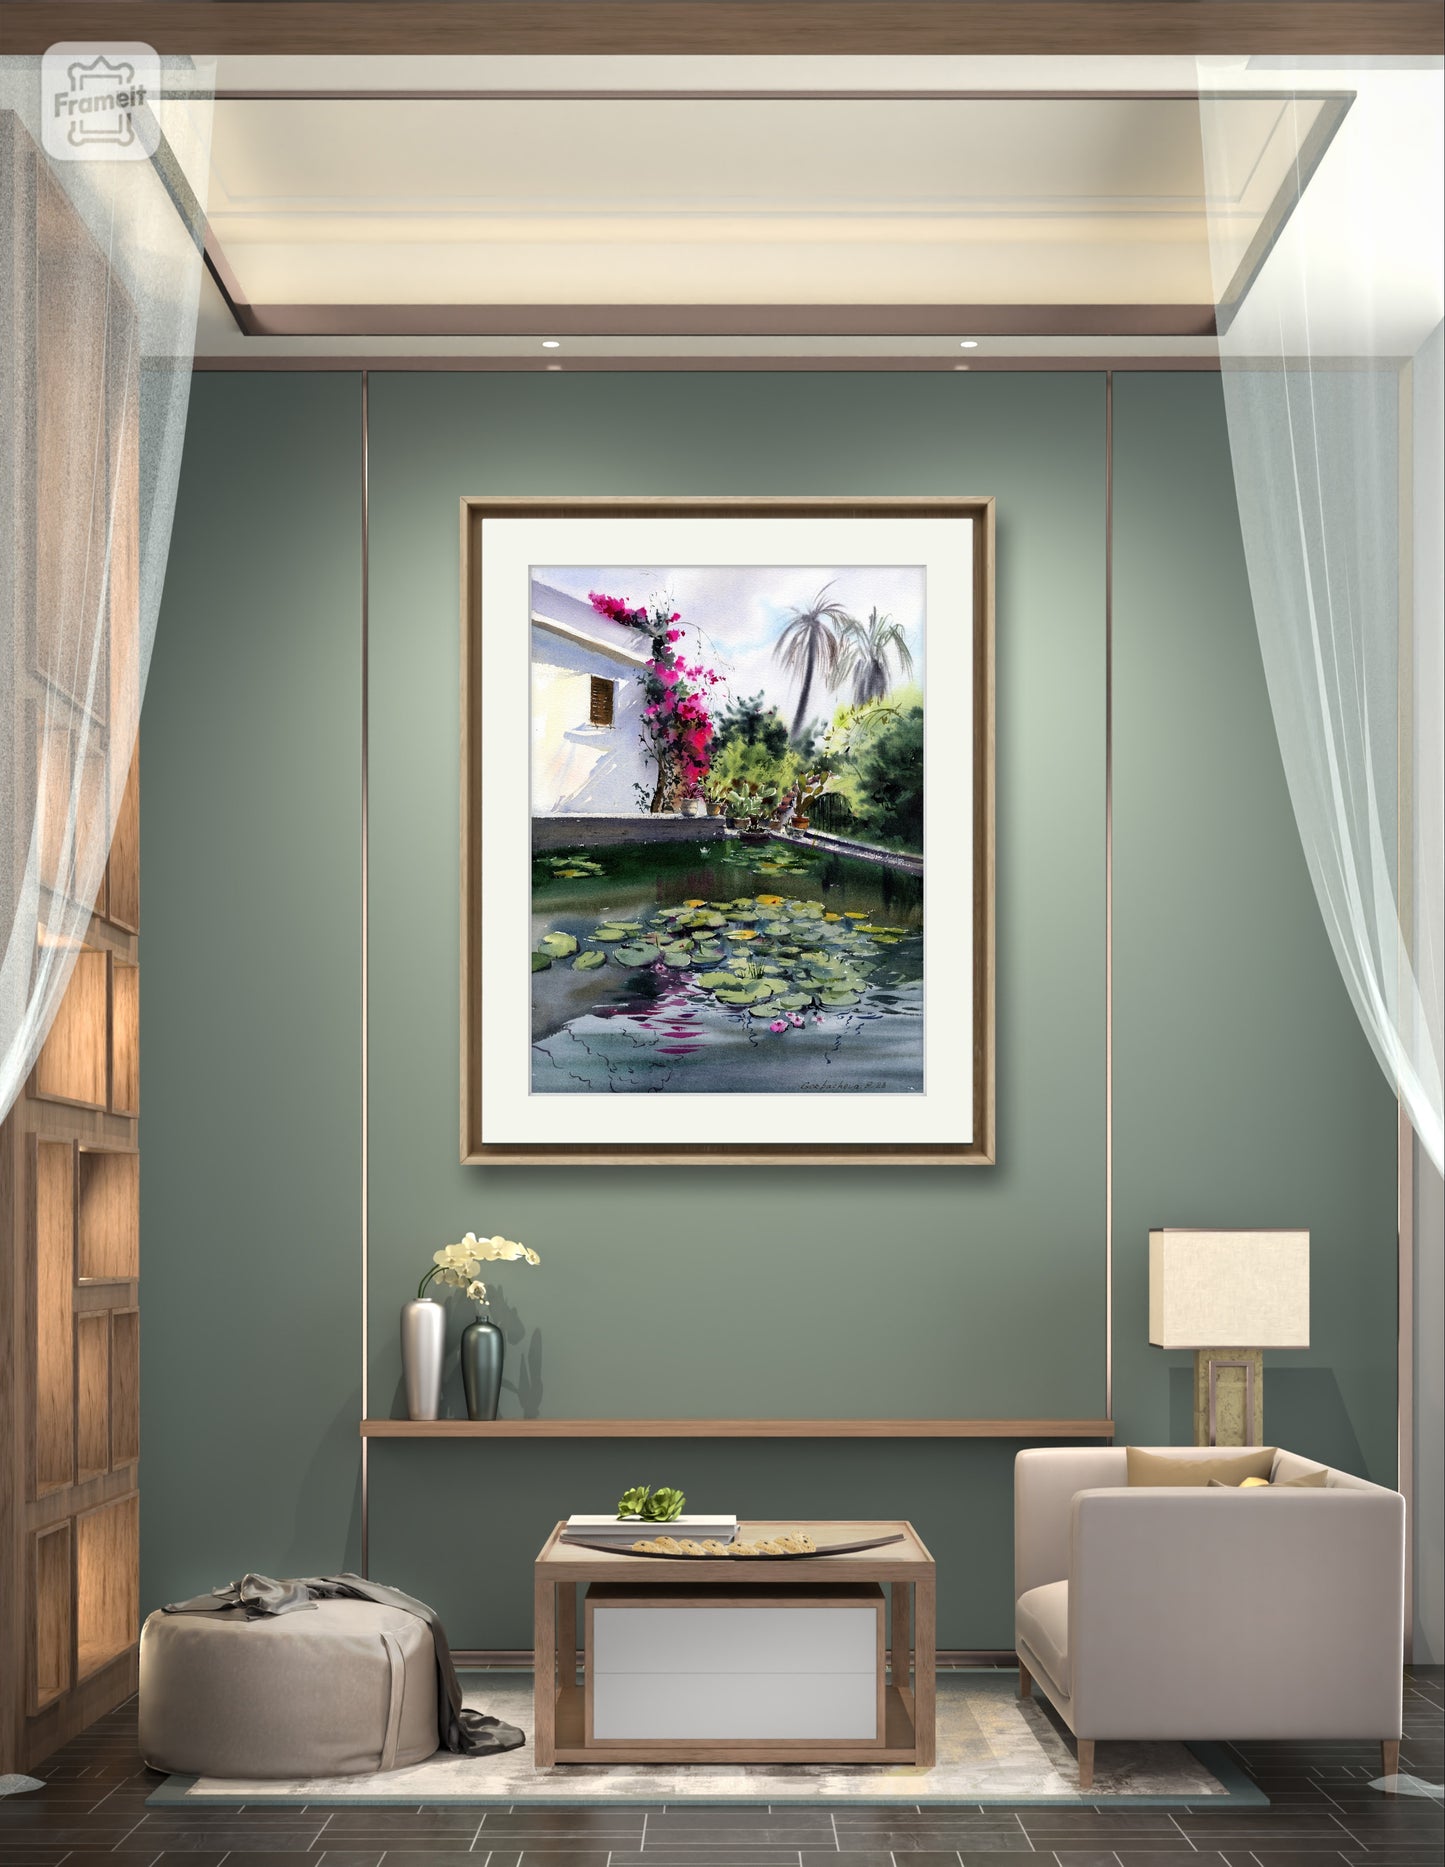 Spanish House Watercolor Prin, Travel Art Gift, European Wall Decor, Mediterranean Backyard, Pond Water Lilies